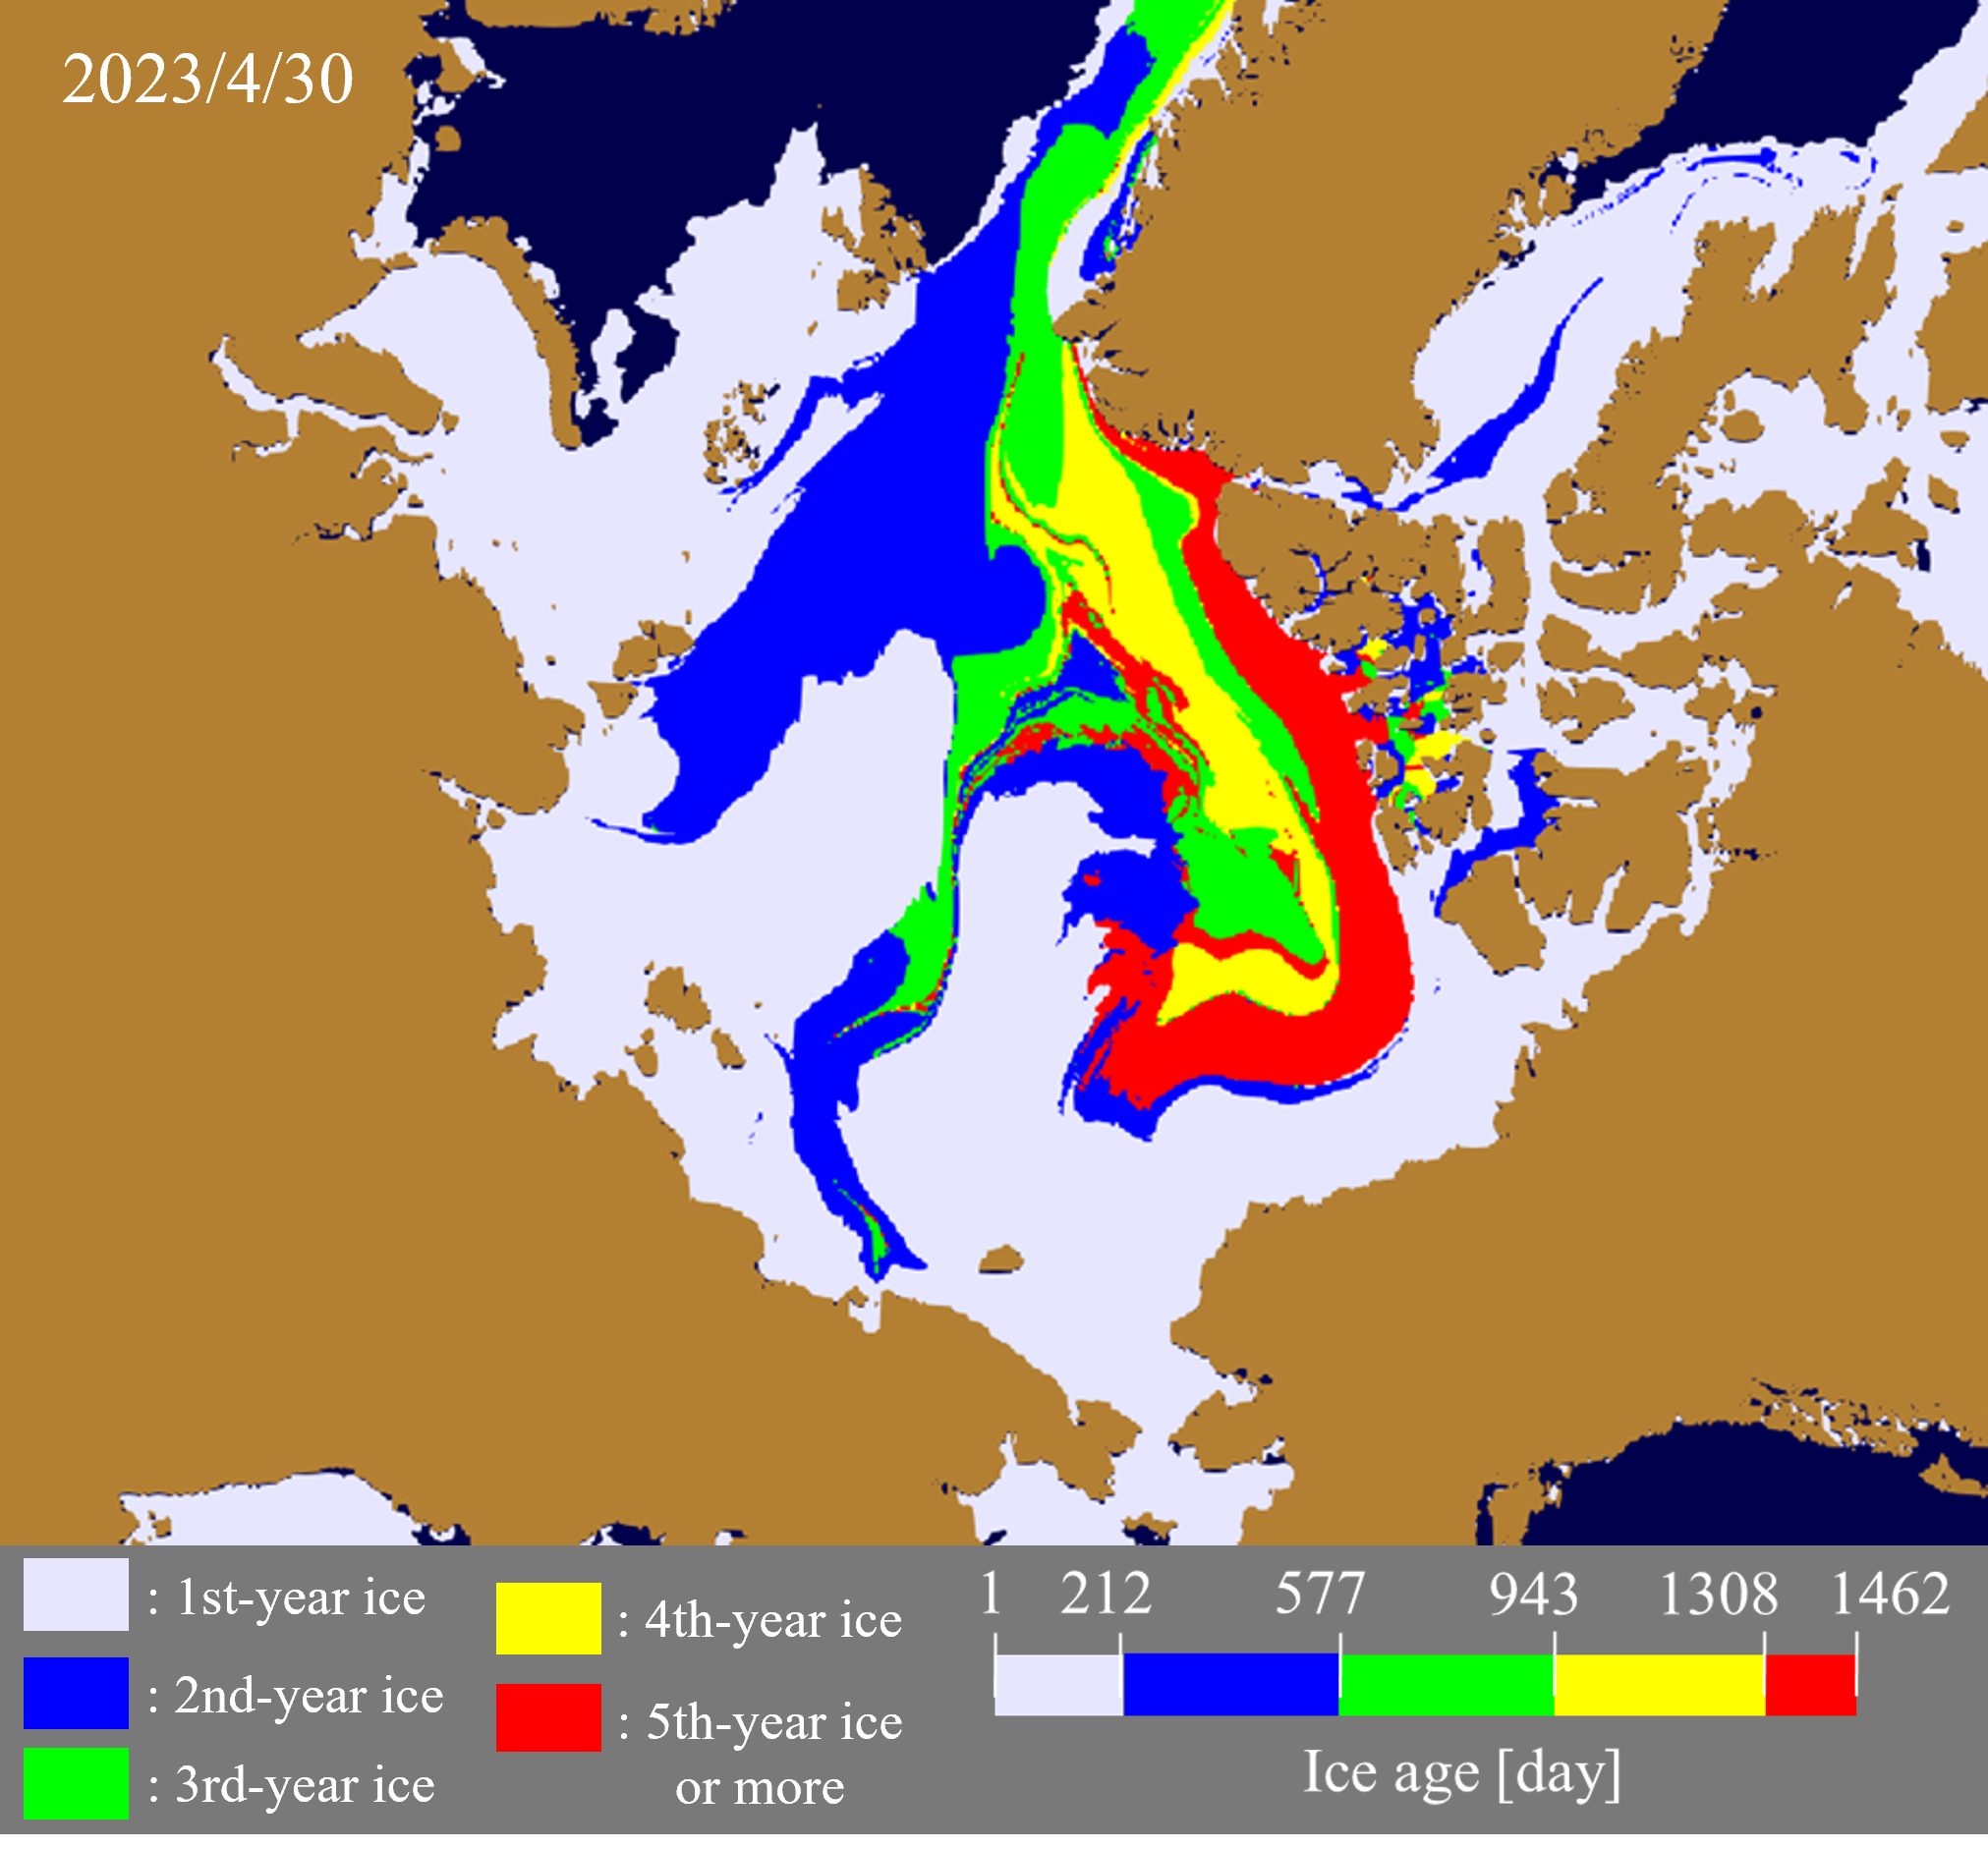 Sea ice age distribution on April 30, 2023.